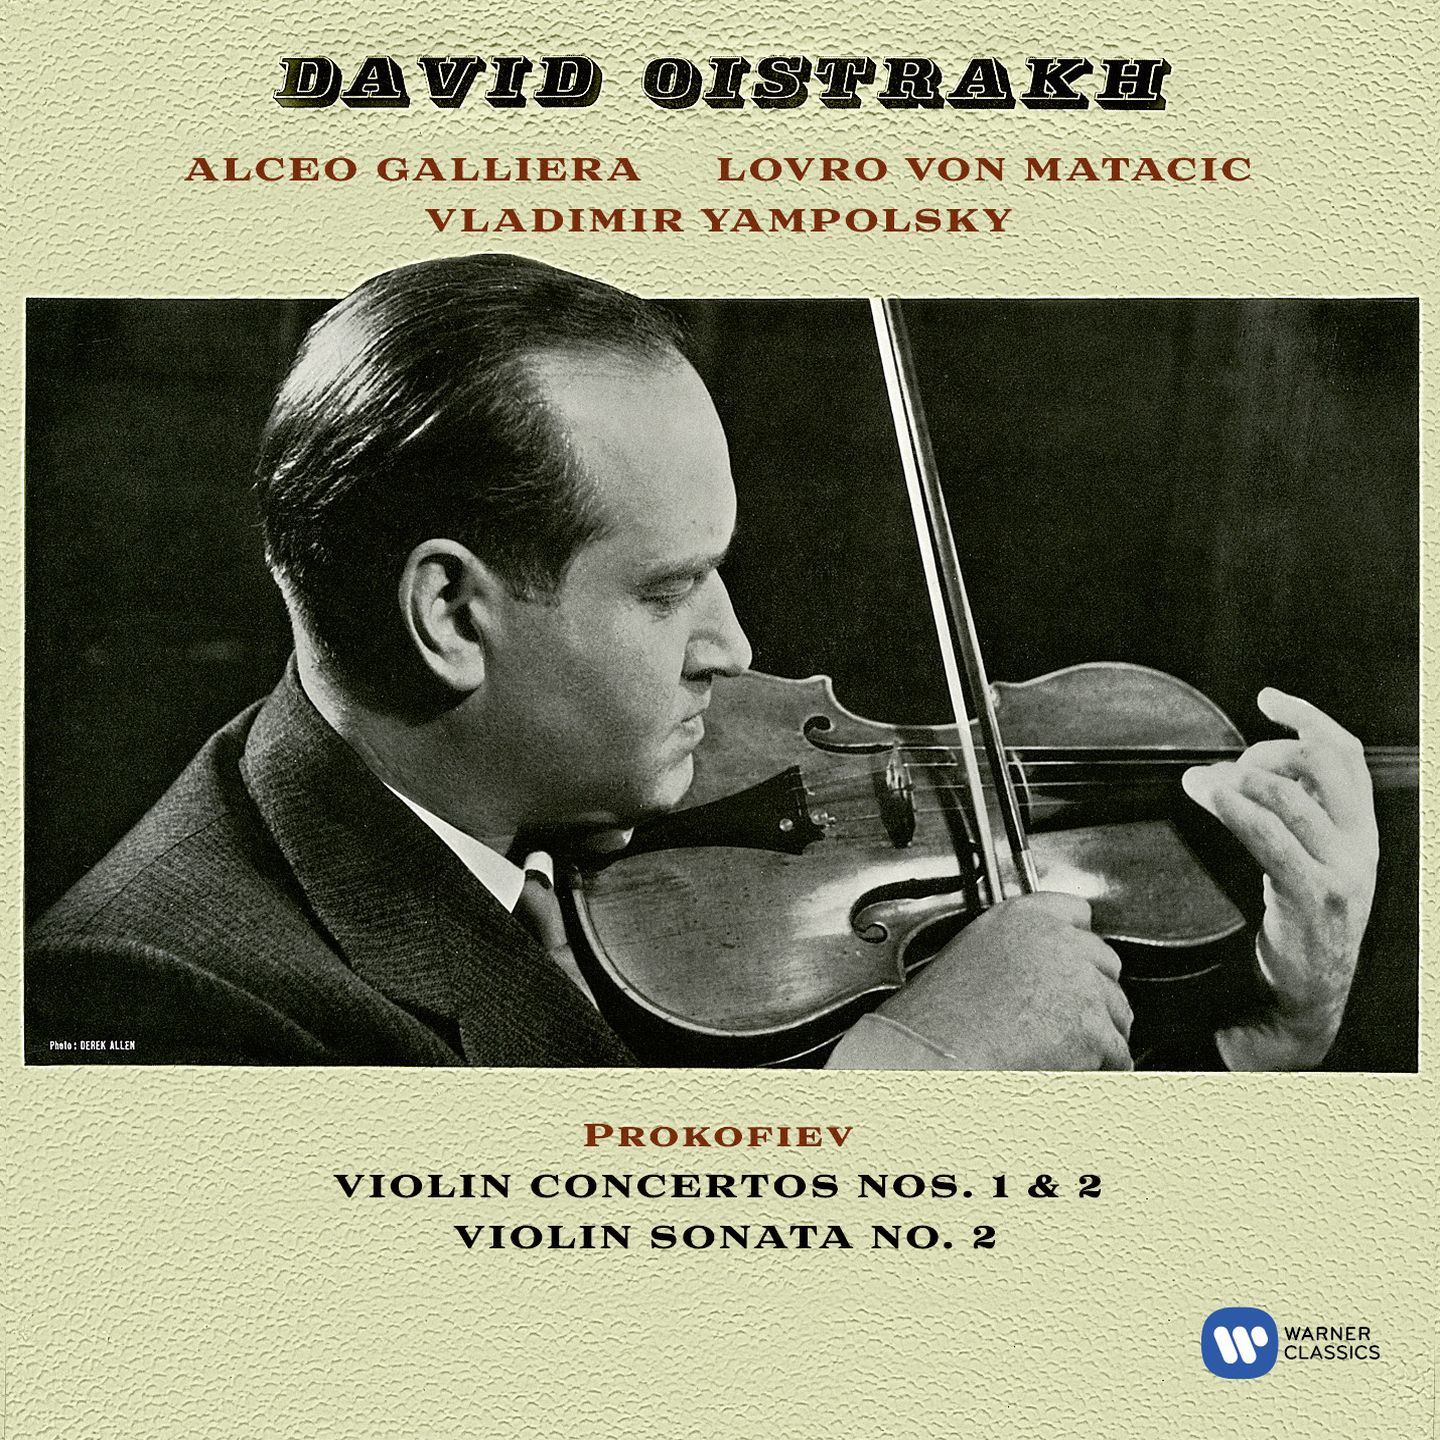 Violin Sonata No. 2 in D Major, Op. 94bis: I. Moderato